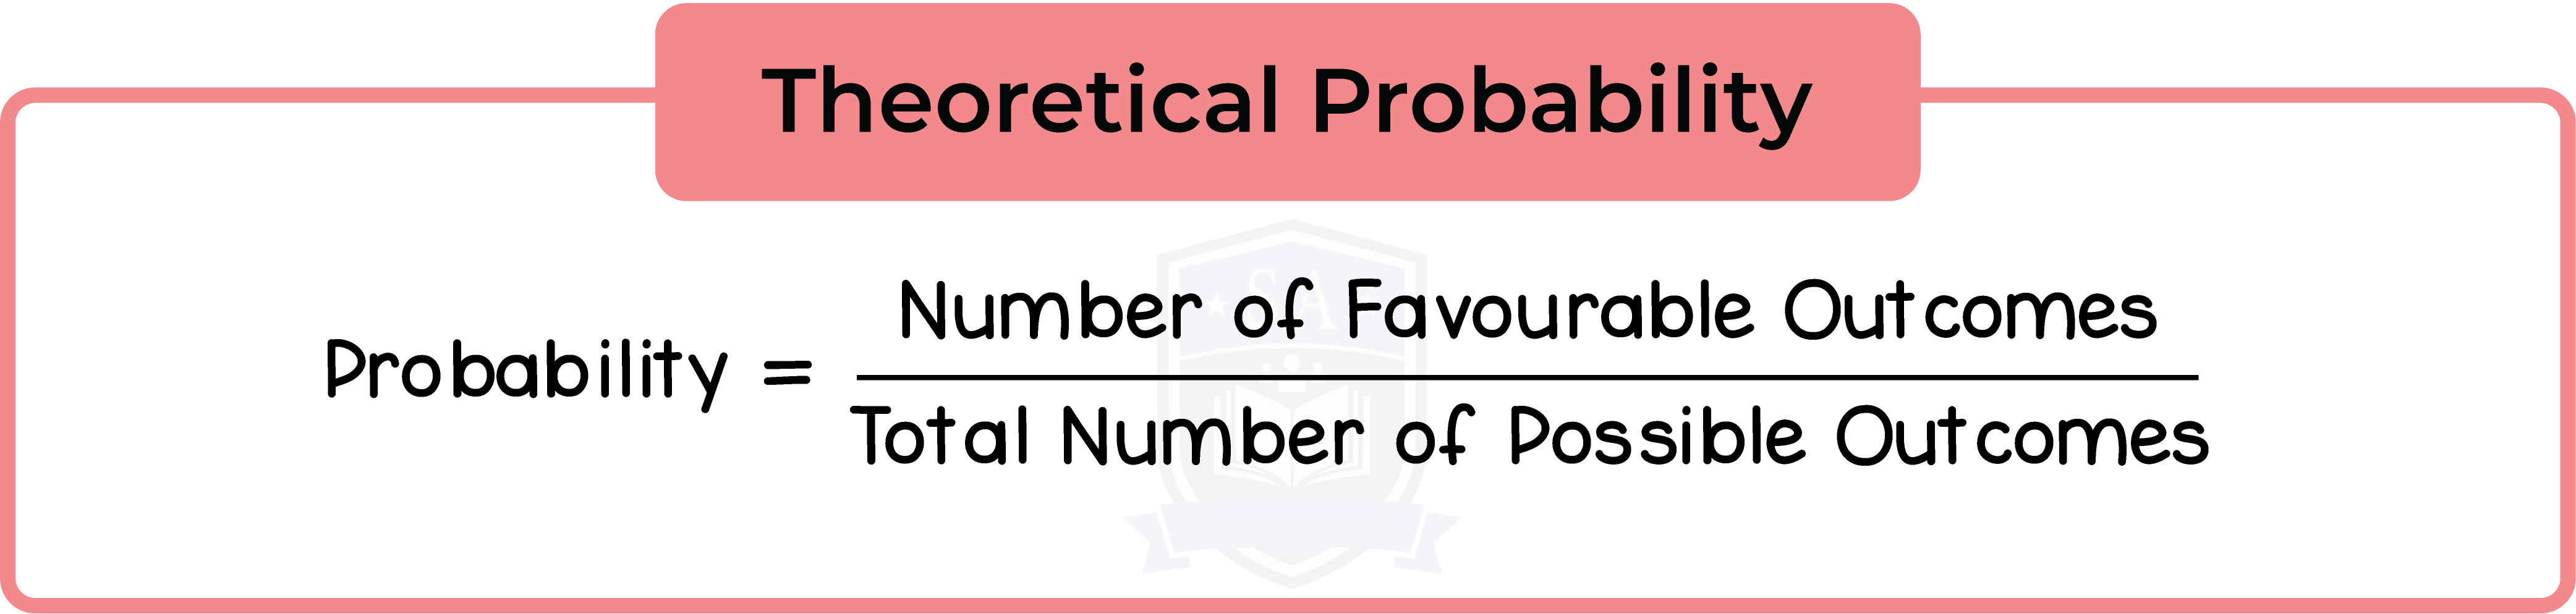 edexcel_igcse_mathematics a_topic 40_probability_001_Theoretical Probability